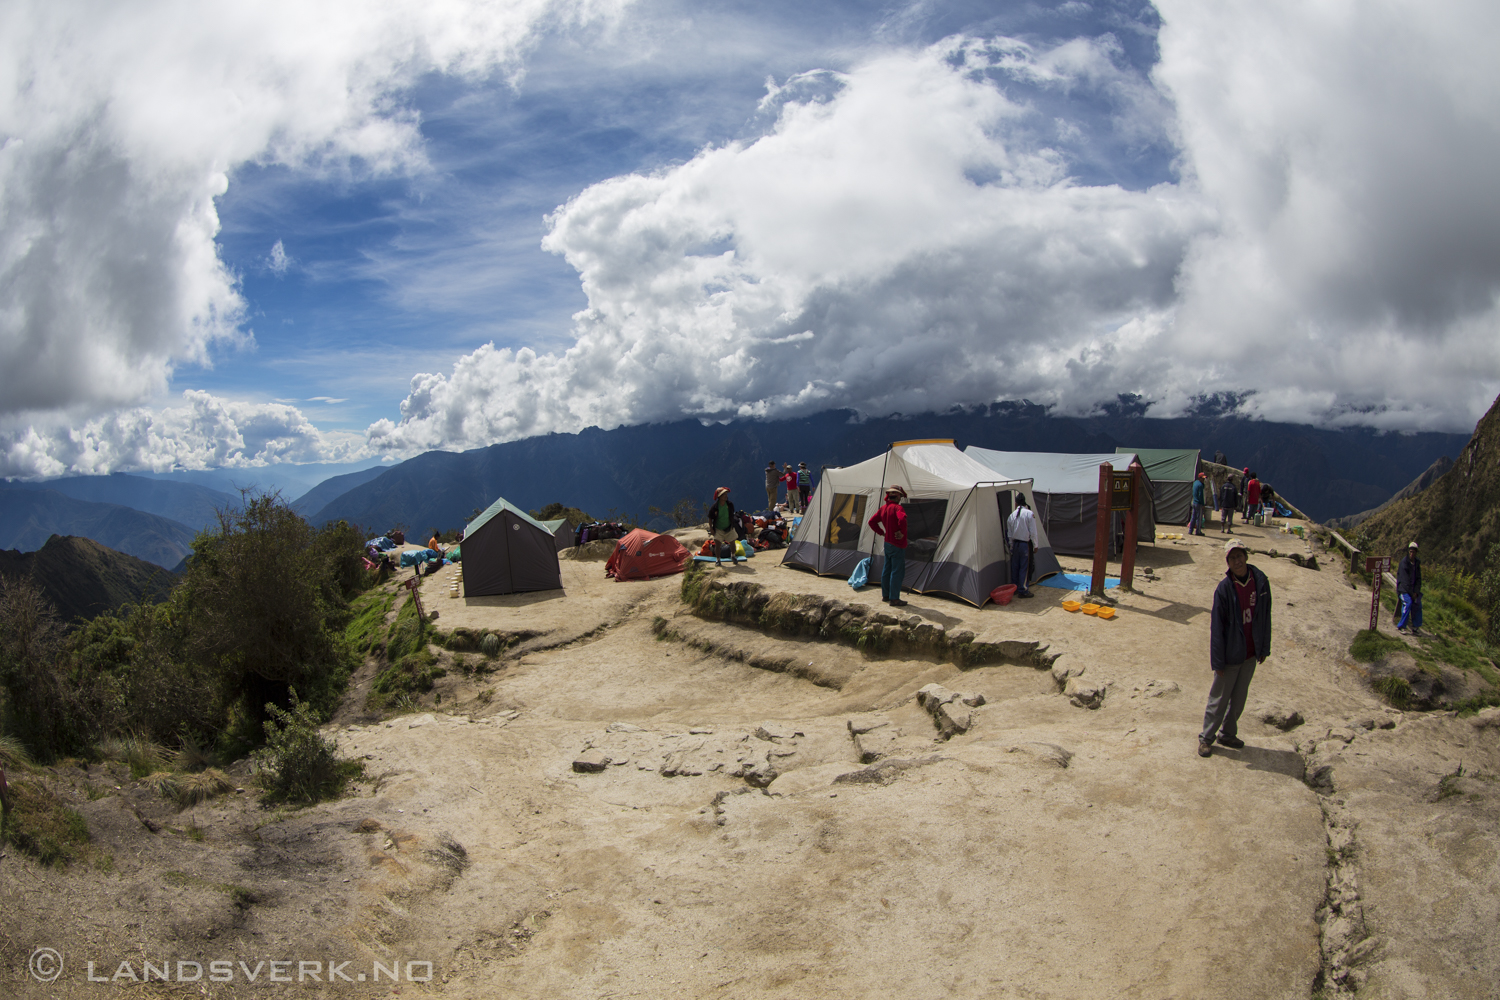 One of the camp sites. The Inka Trail to Machu Picchu, Peru. 

(Canon EOS 5D Mark III / Canon EF 8-15mm 
f/4 L USM Fisheye)